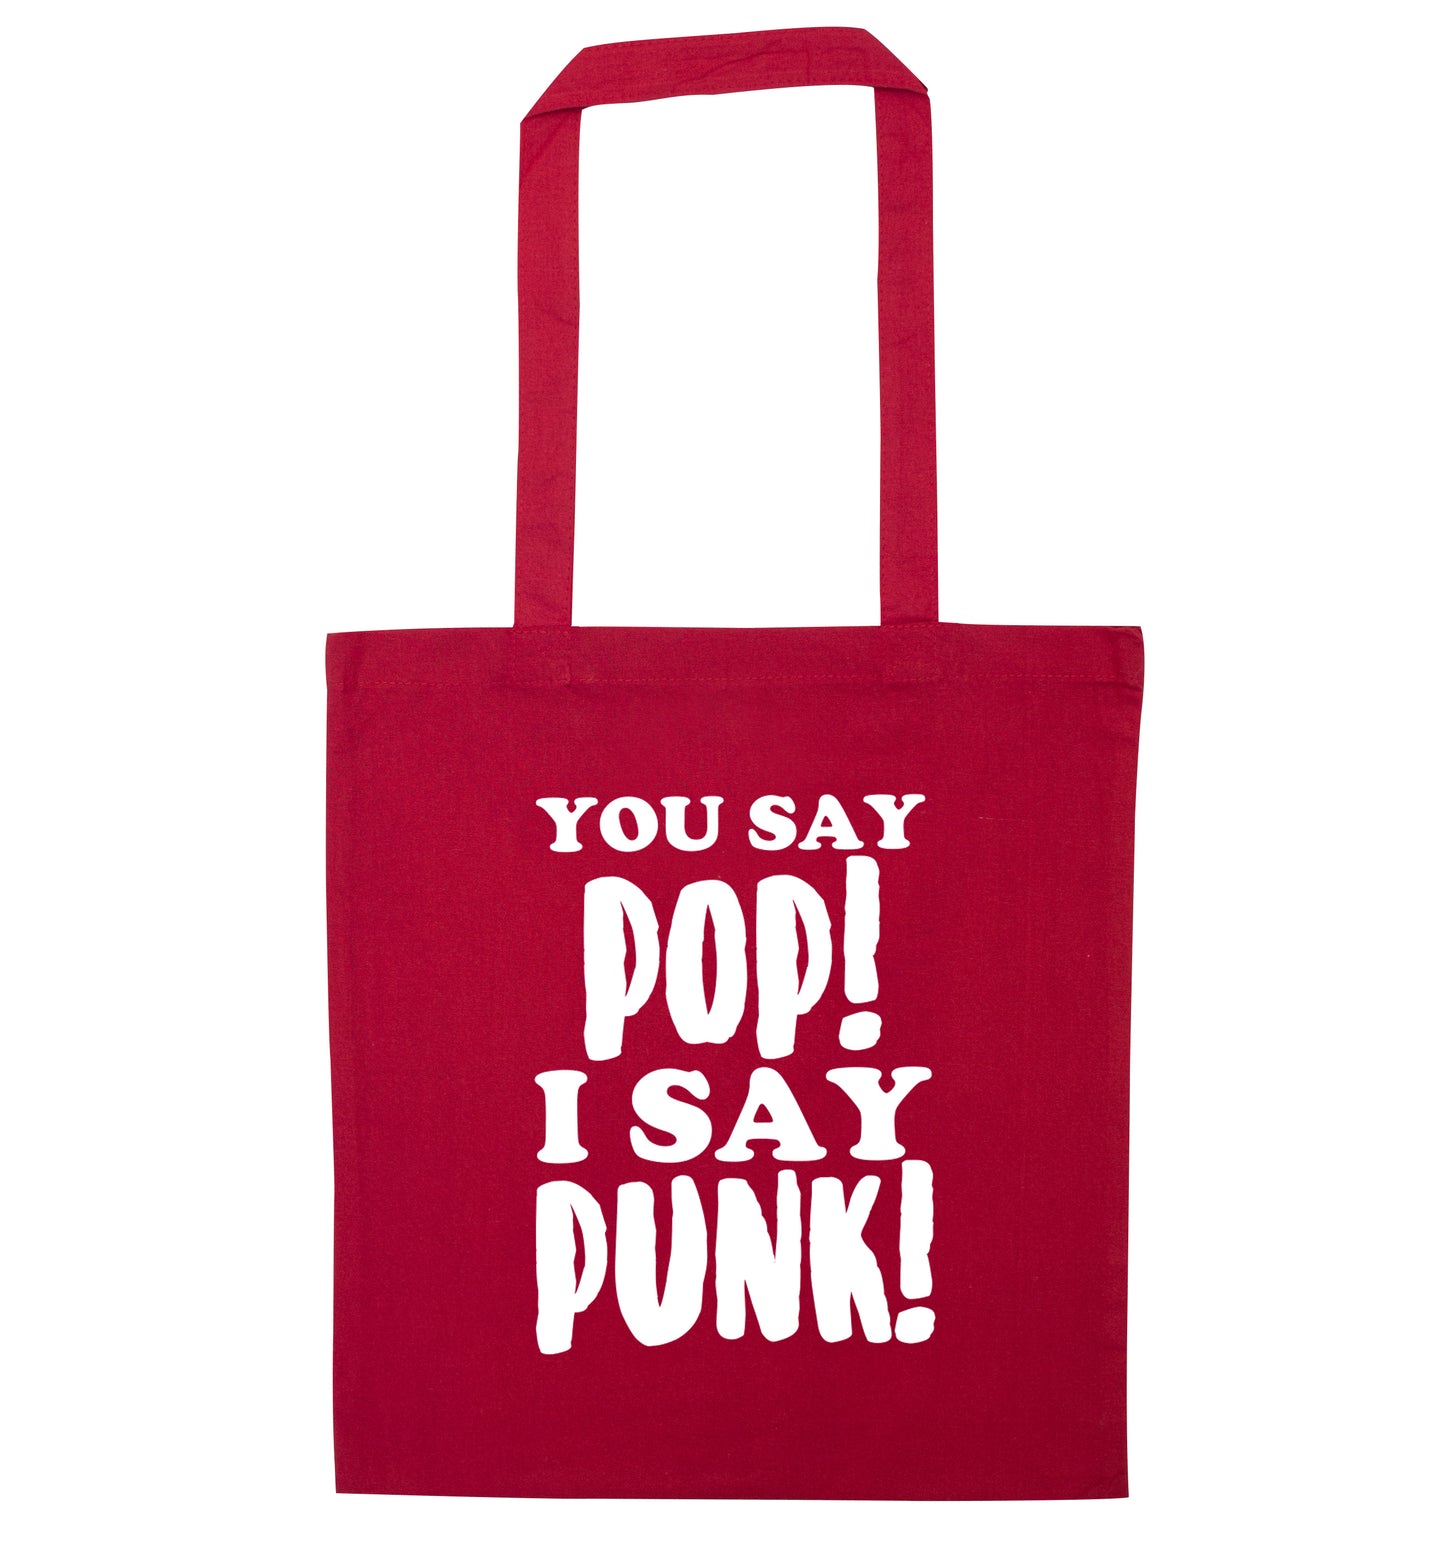 You say pop I say punk! red tote bag